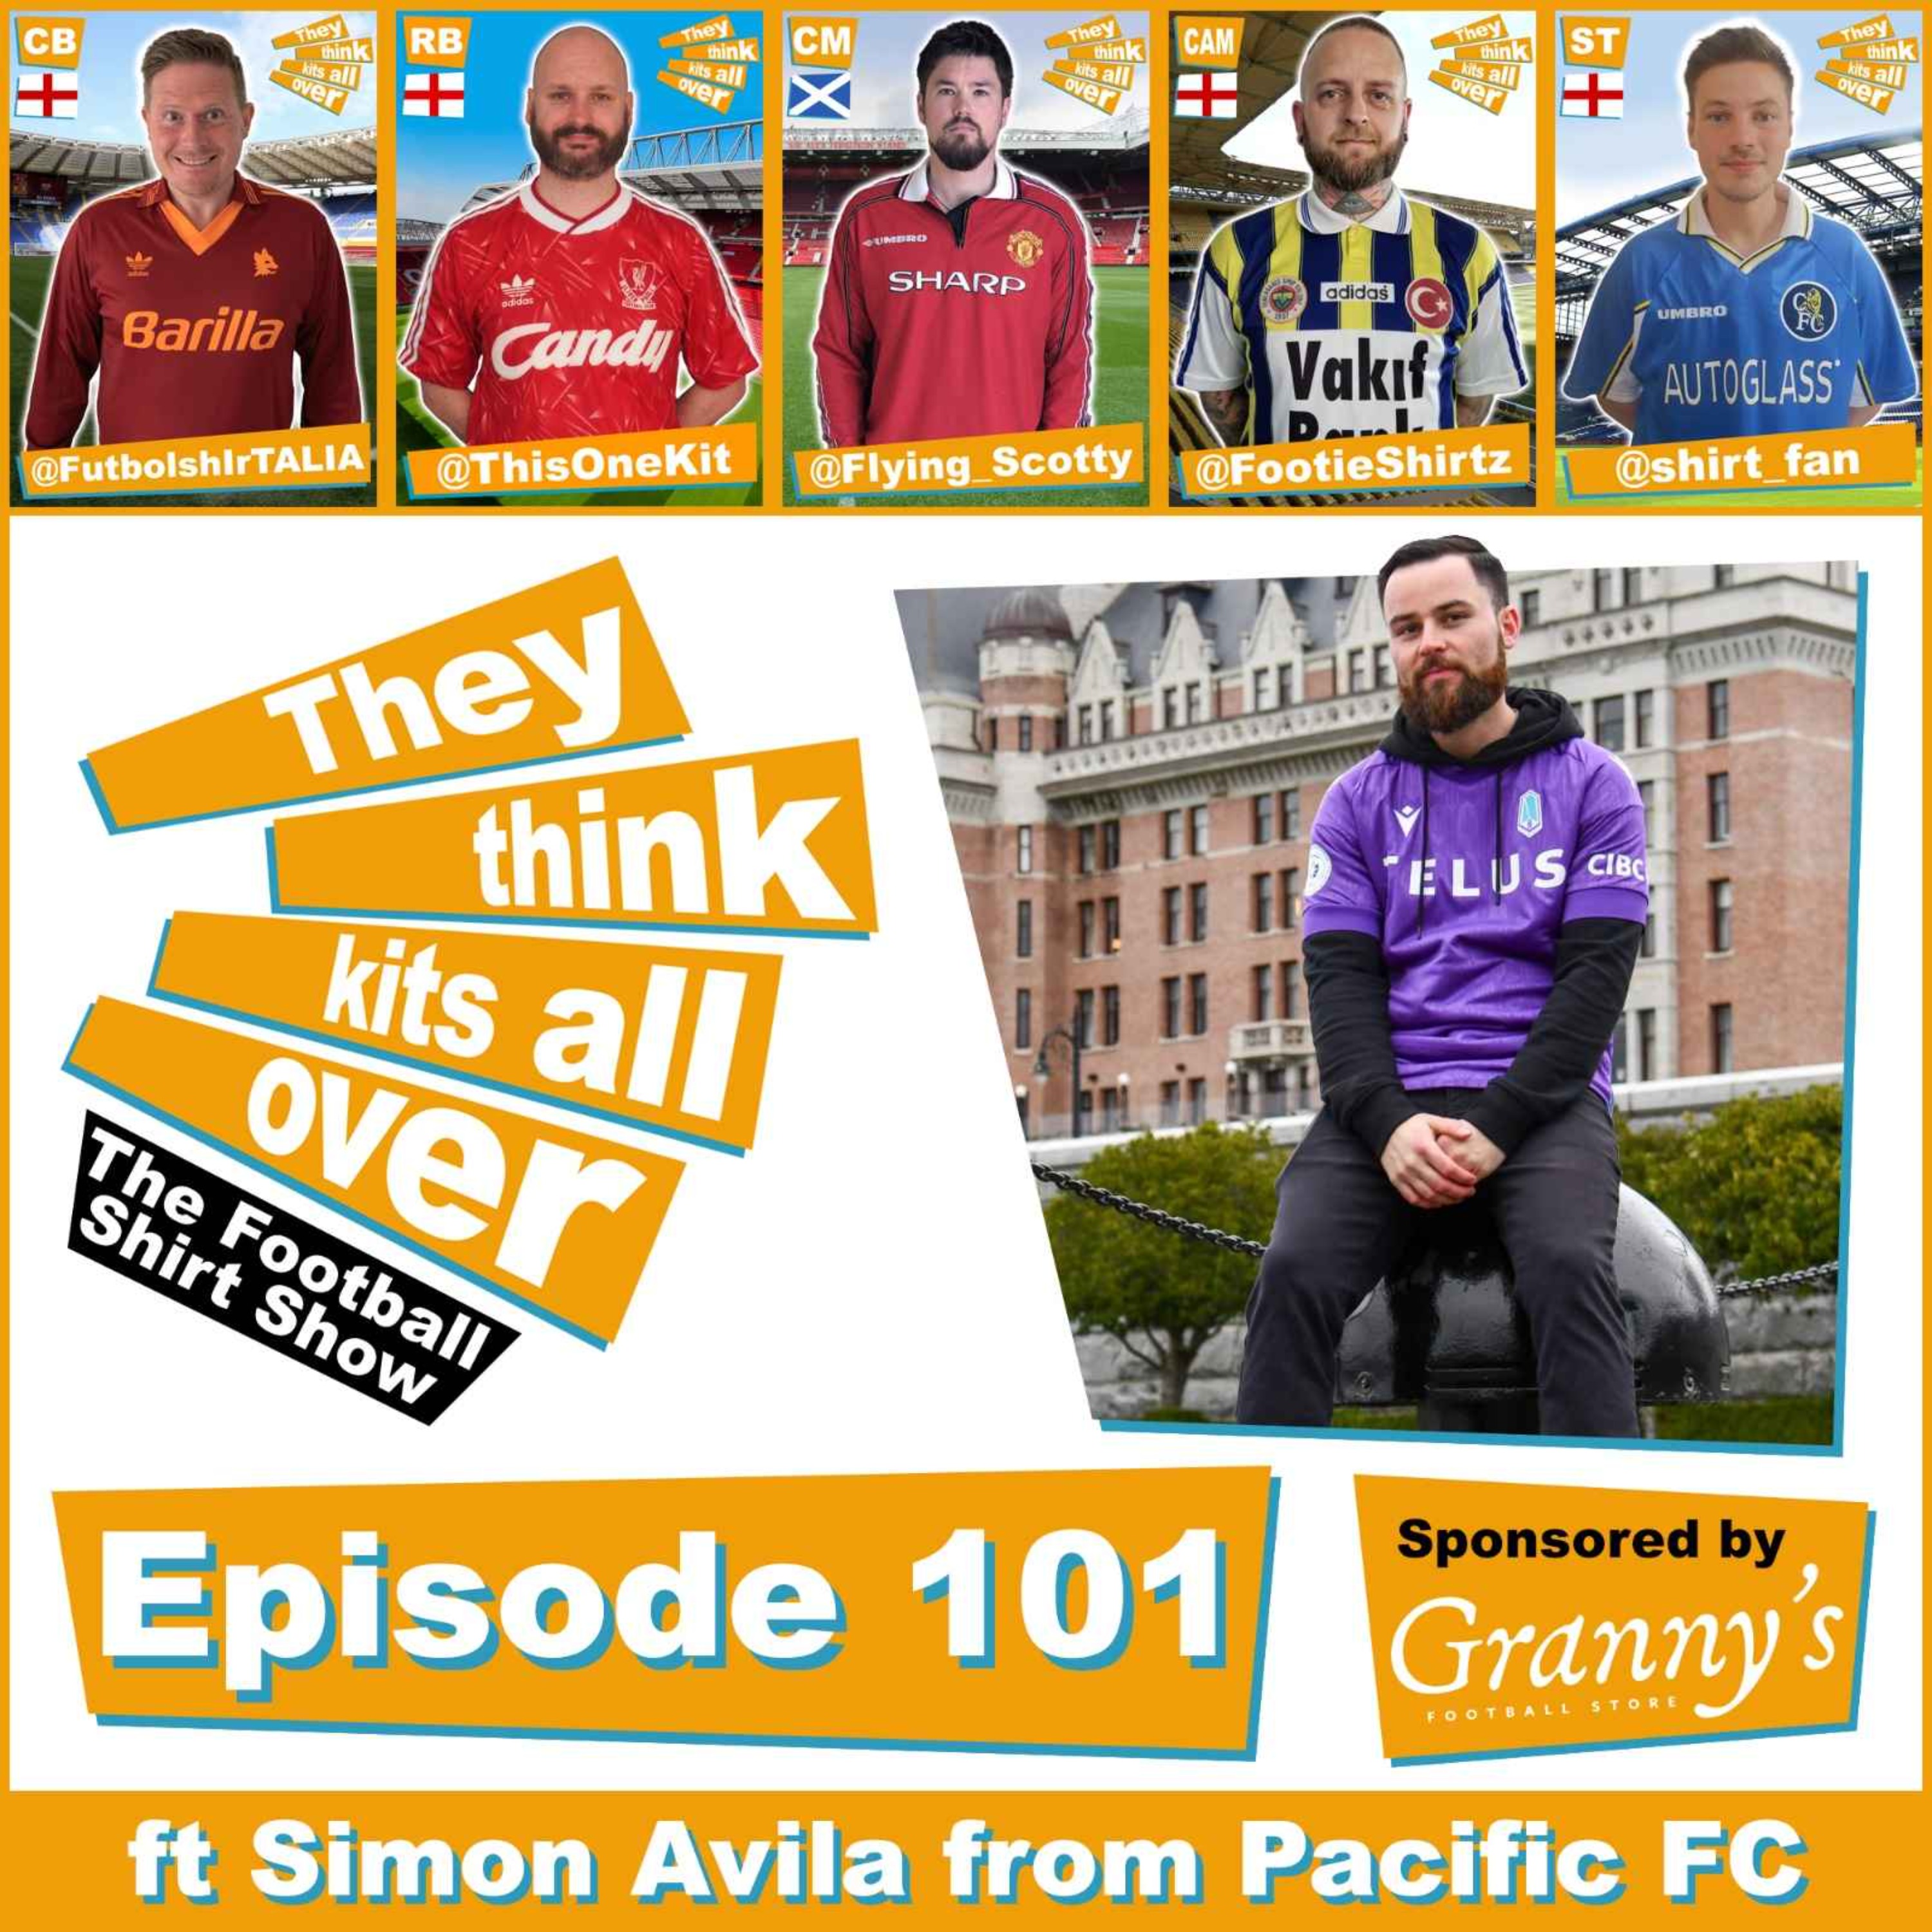 Episode 101 - Simon Avila, Pacific FC